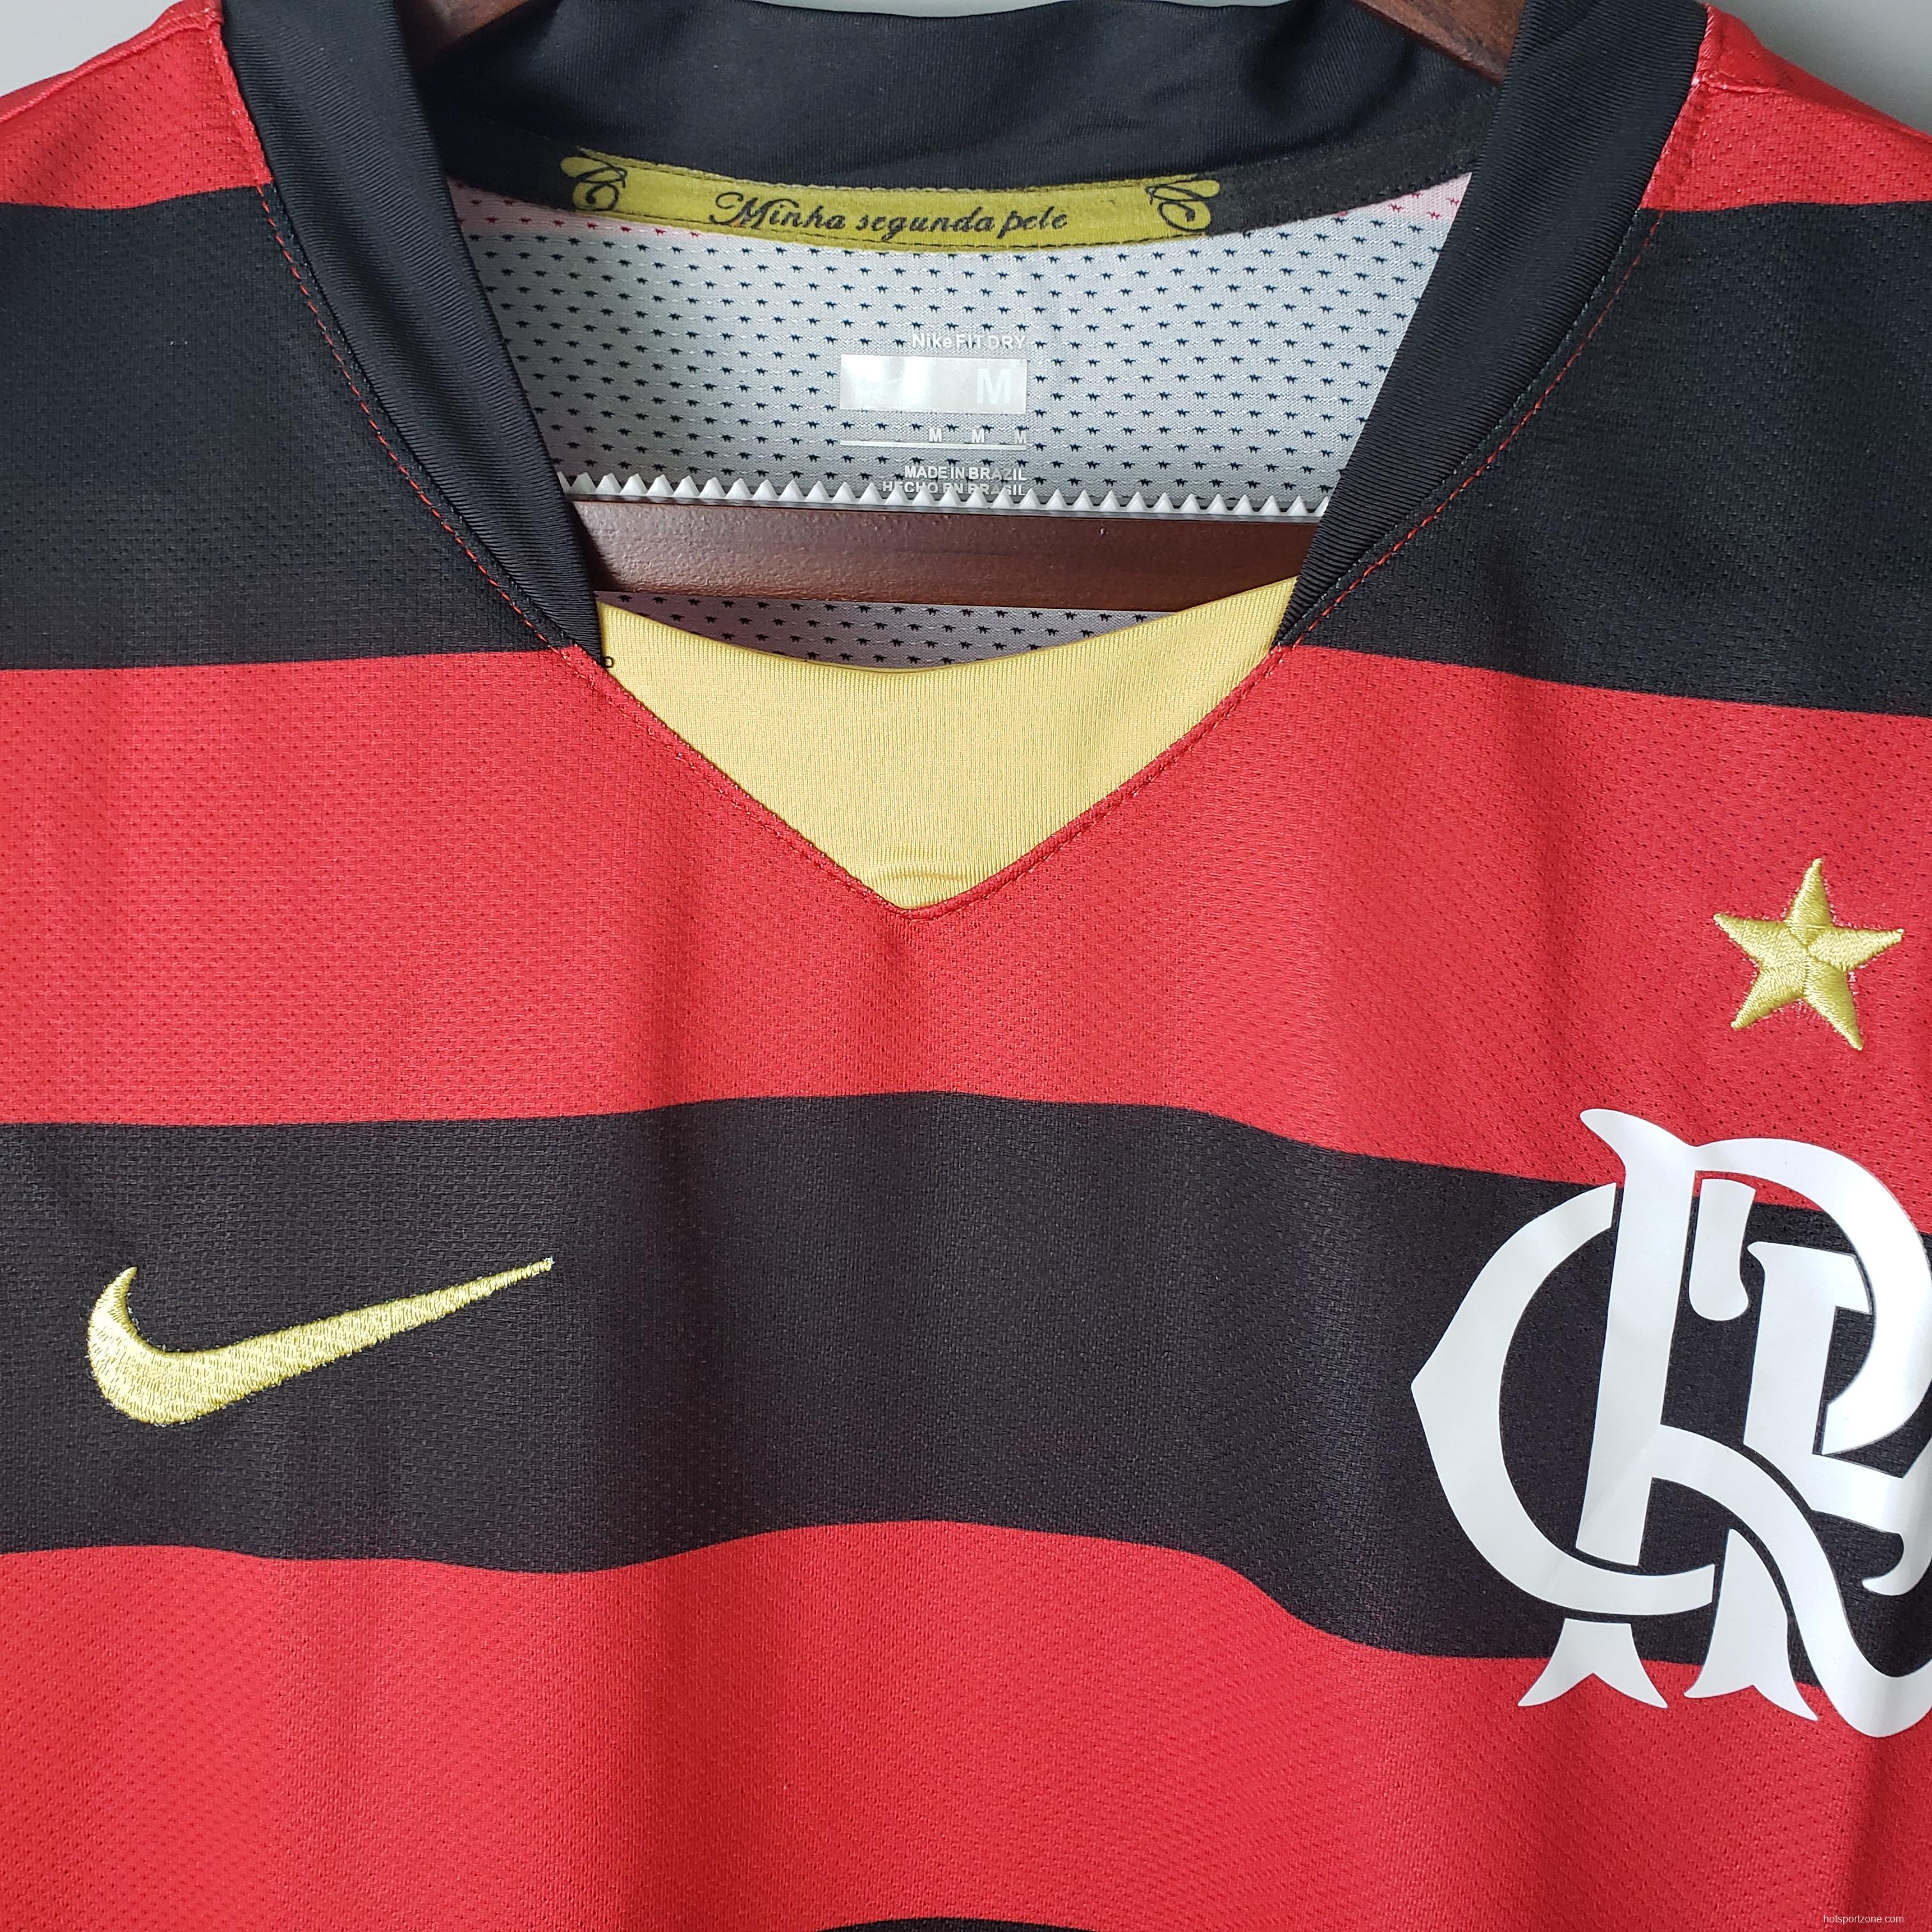 Retro 2008 2009 Flamengo home retro Soccer Jersey